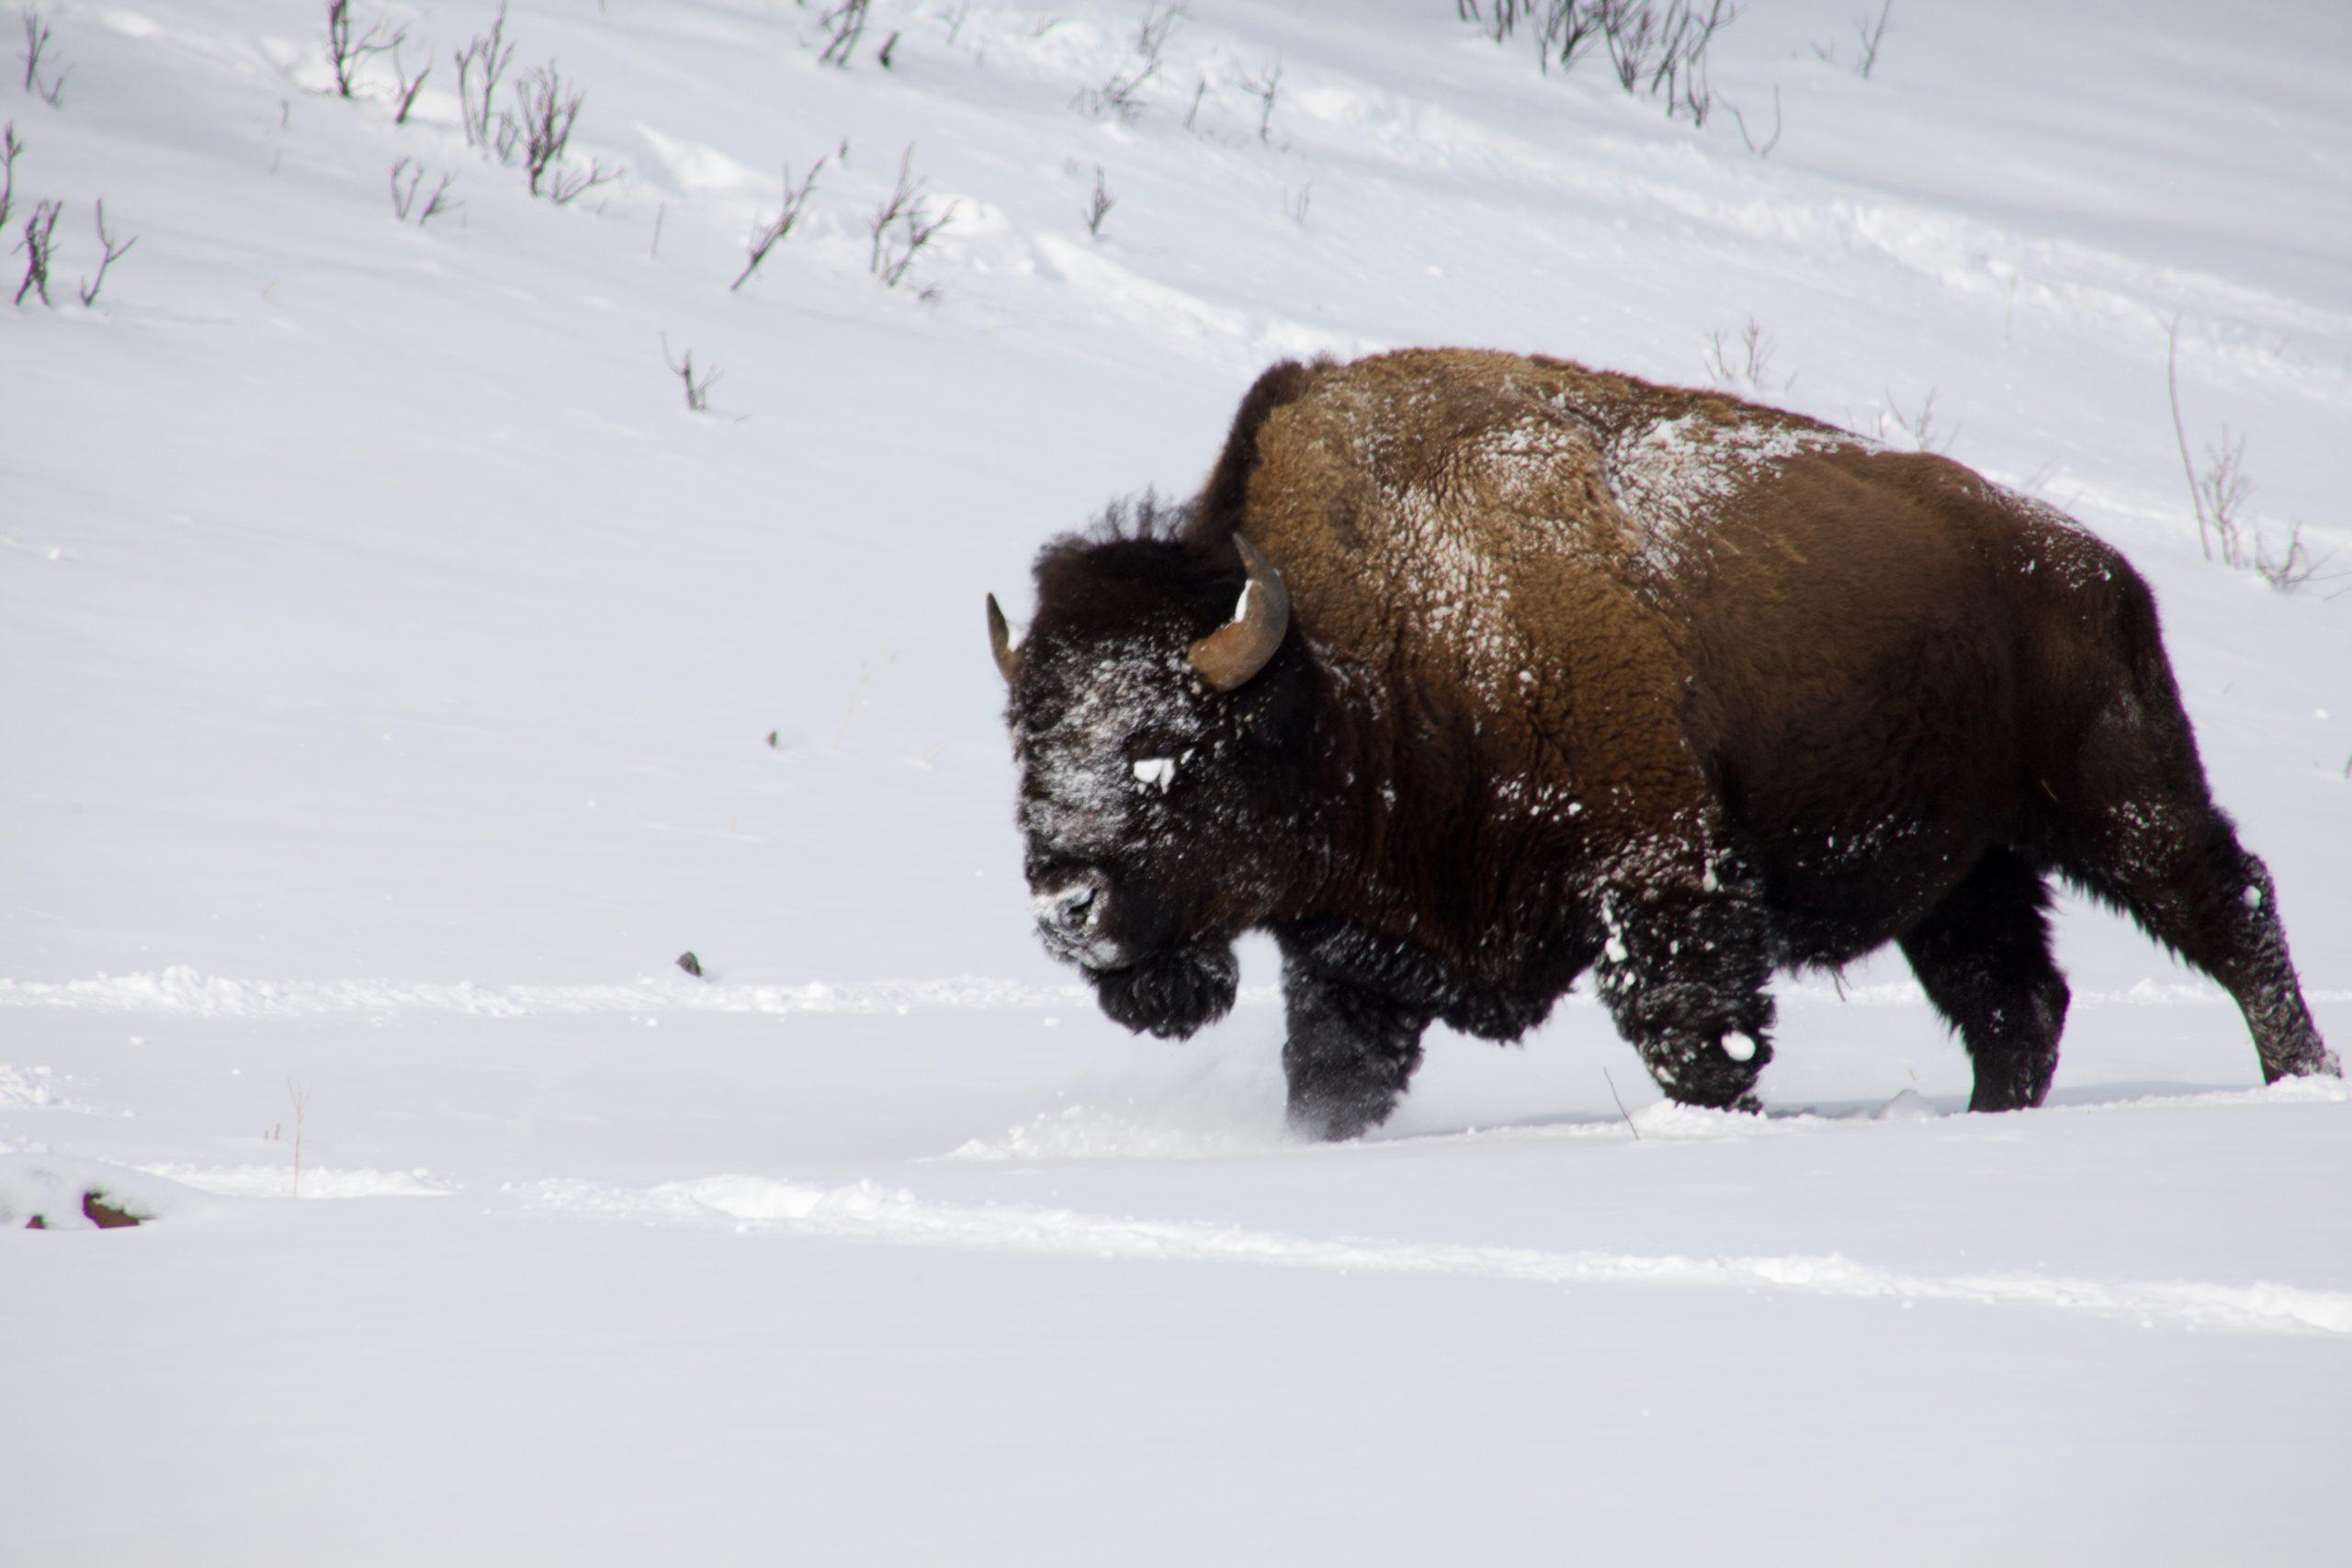 A bison in a snowy field/ un bisonete en la nieve